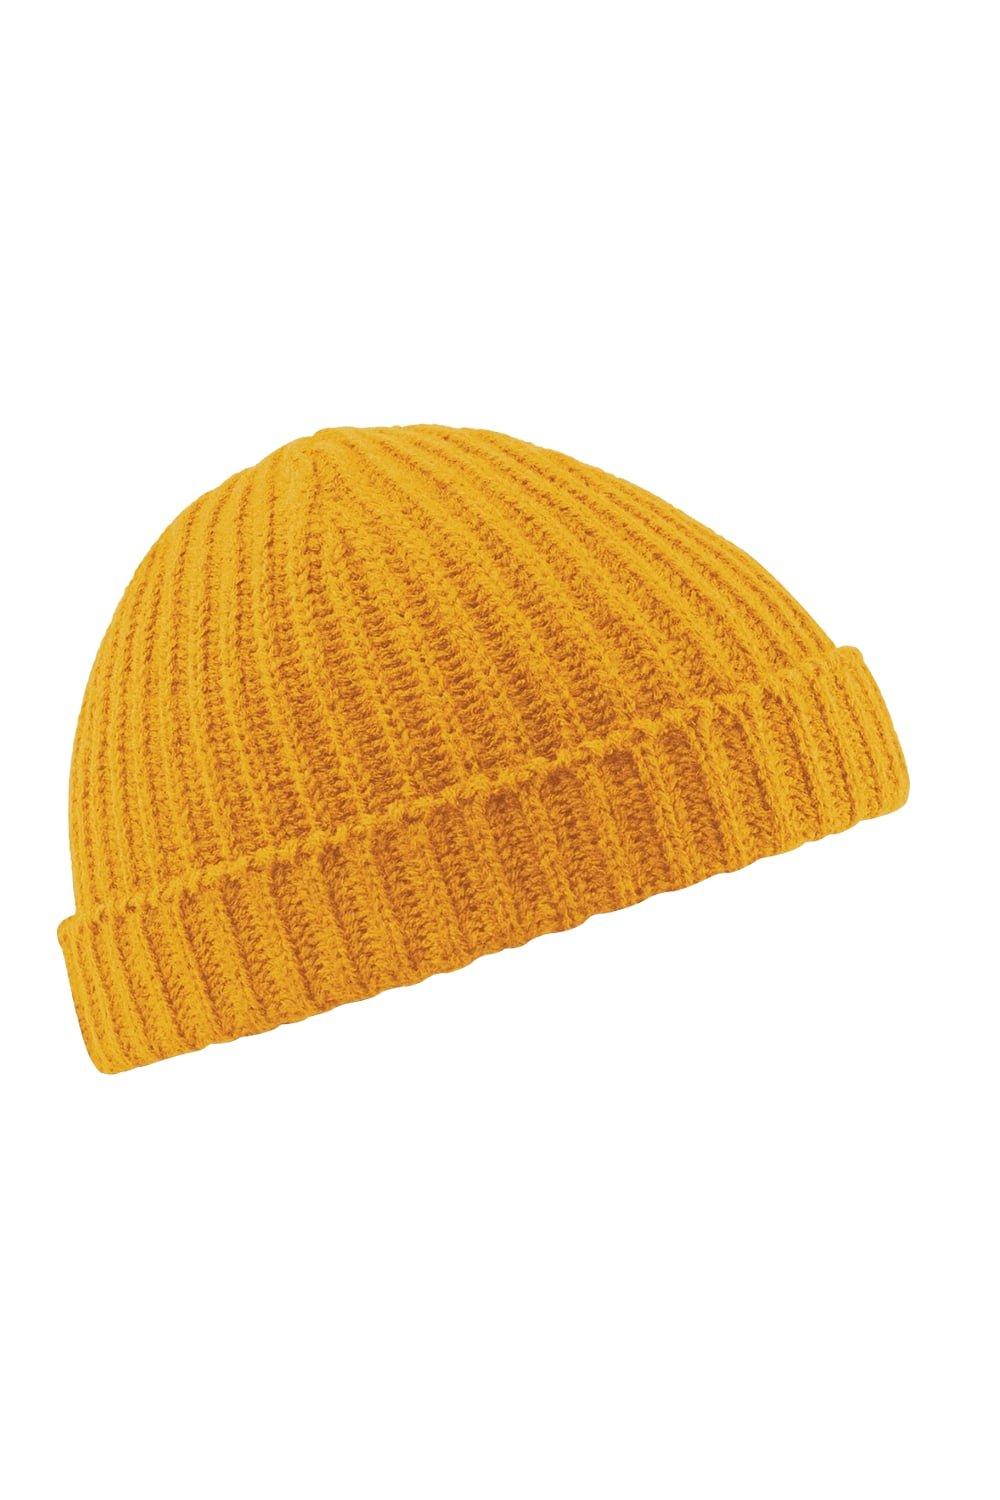 Траулерная шапка Beechfield, желтый траулерная шапка beechfield красный